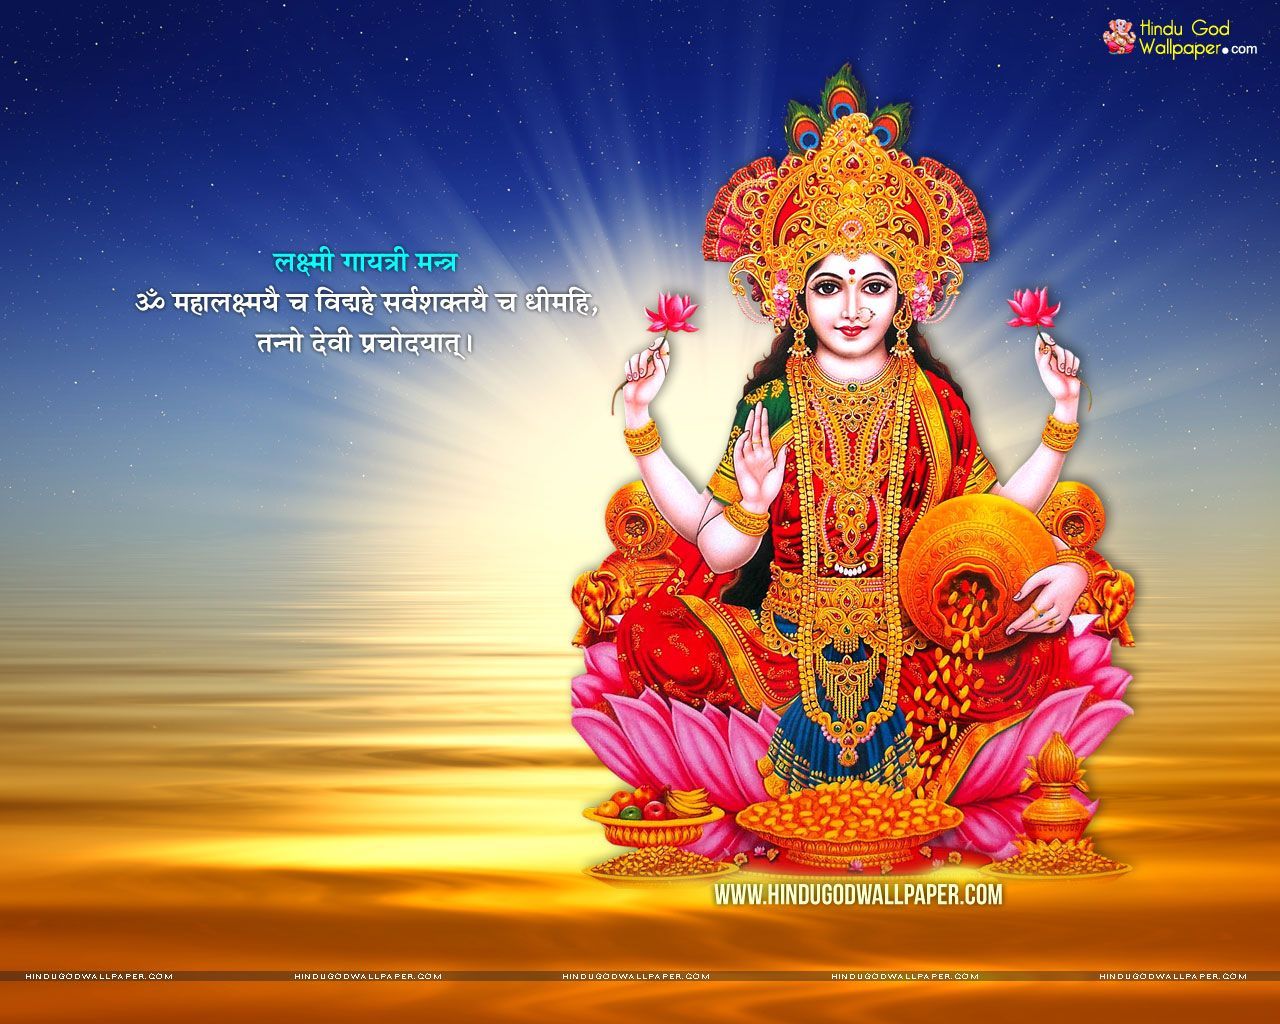 Jai Maa Laxmi Wallpaper Free Download for Desktop. Wallpaper picture, Wallpaper free download, Navratri image